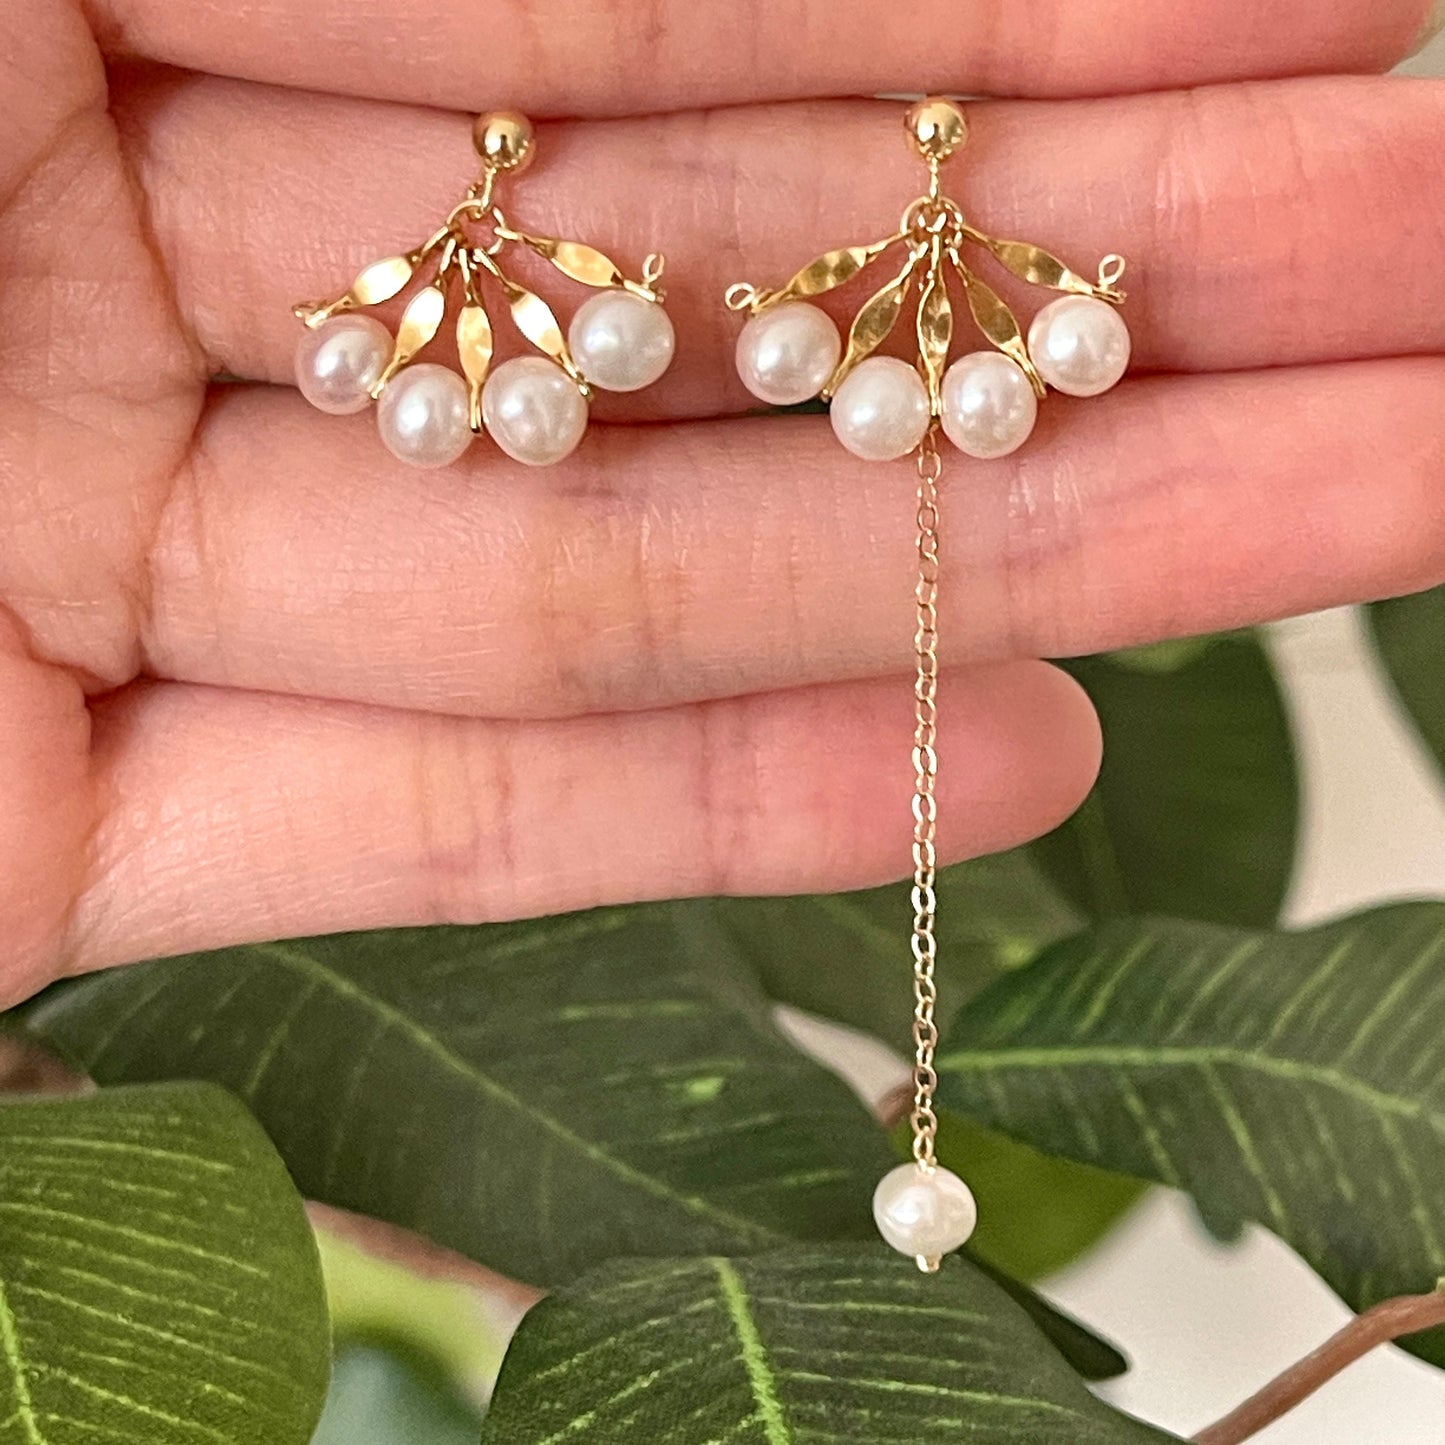 Mismatched fan shaped earrings, natural pearl earrings, 14K gold drop earrings, Asymmetric pearl earrings, handmade bridal wedding earrings